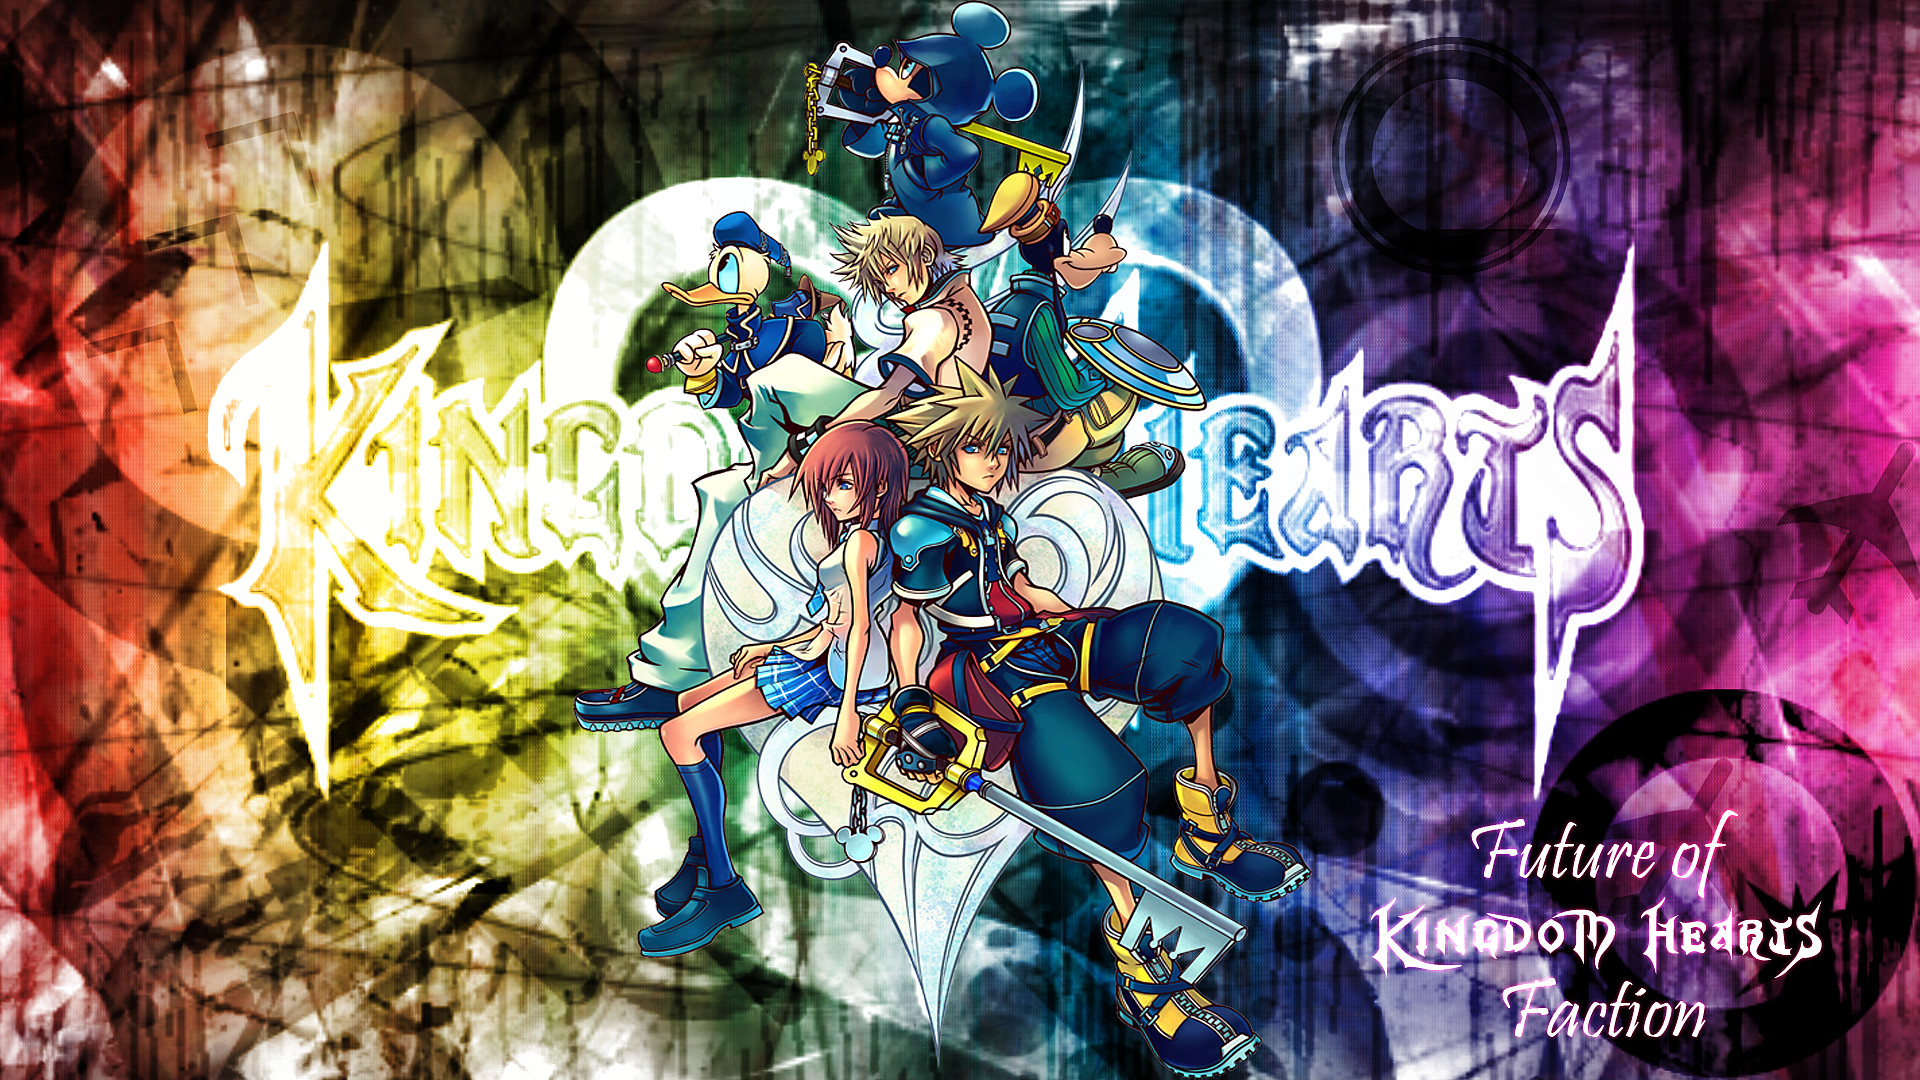 Kingdom Hearts Live Wallpaper 67 images